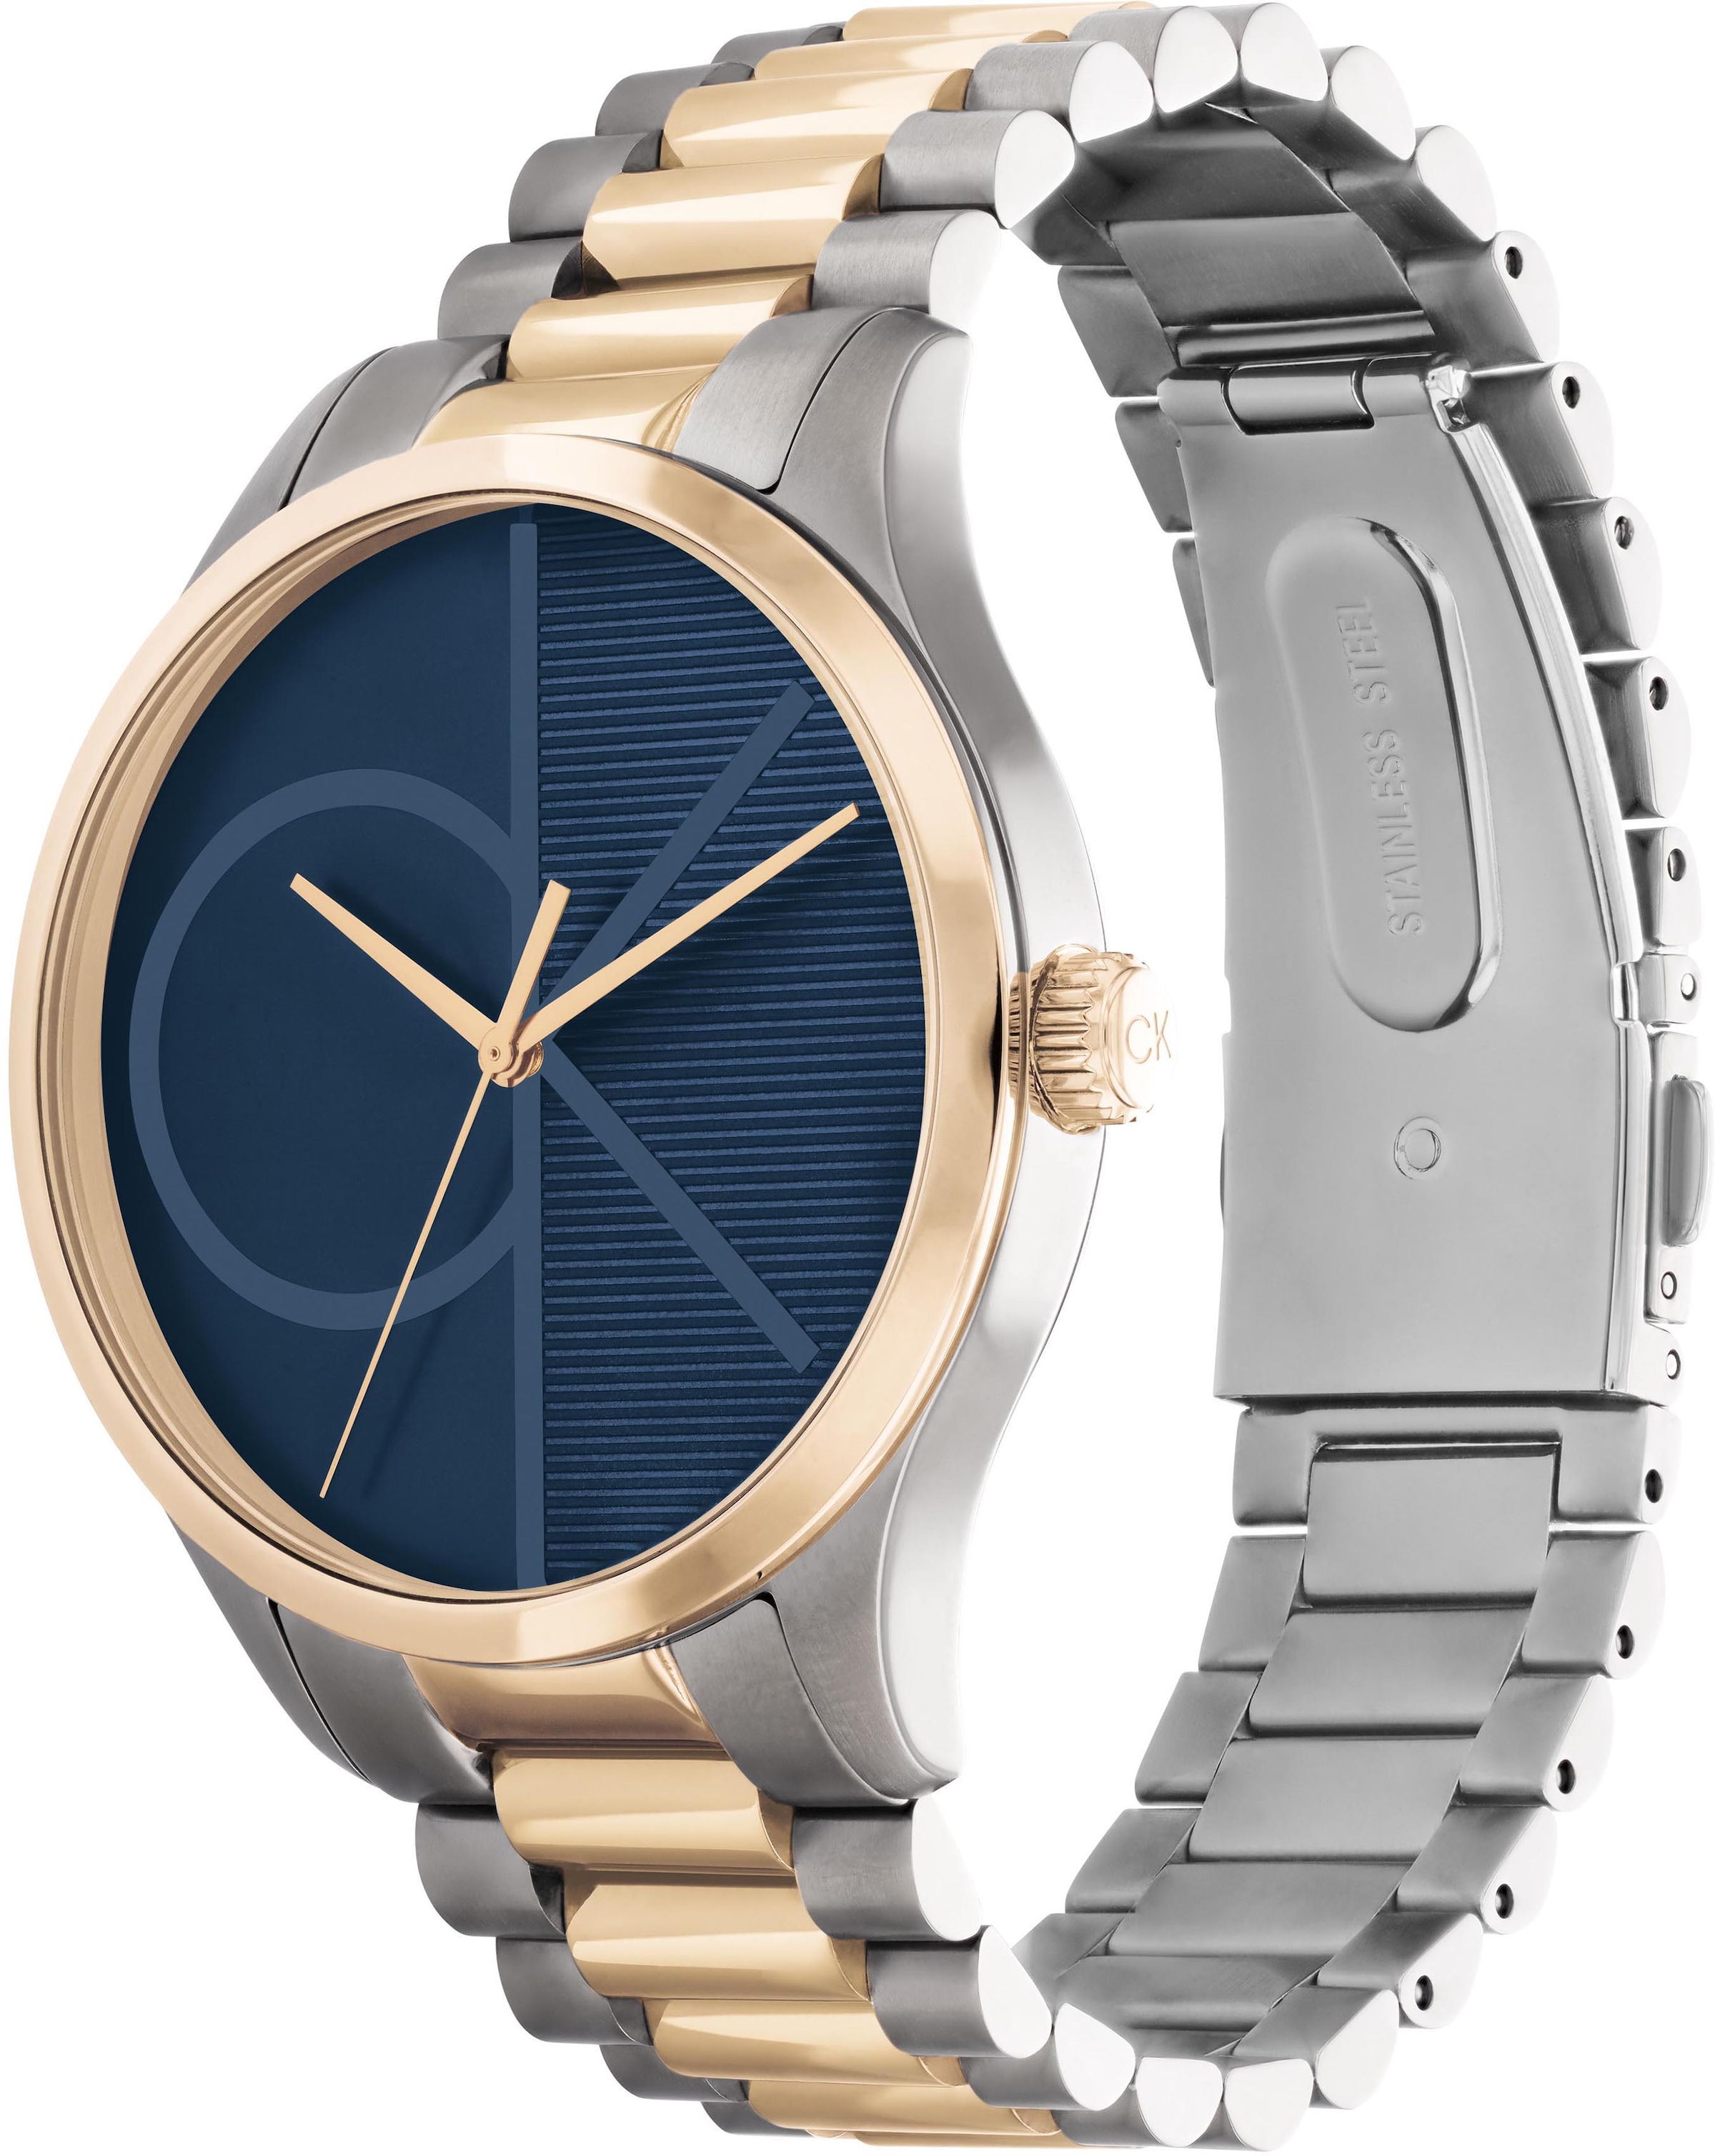 Calvin Klein Quarzuhr »ICONIC, 25200165«, Armbanduhr, Herrenuhr, Mineralglas, bicolor, IP-Beschichtung